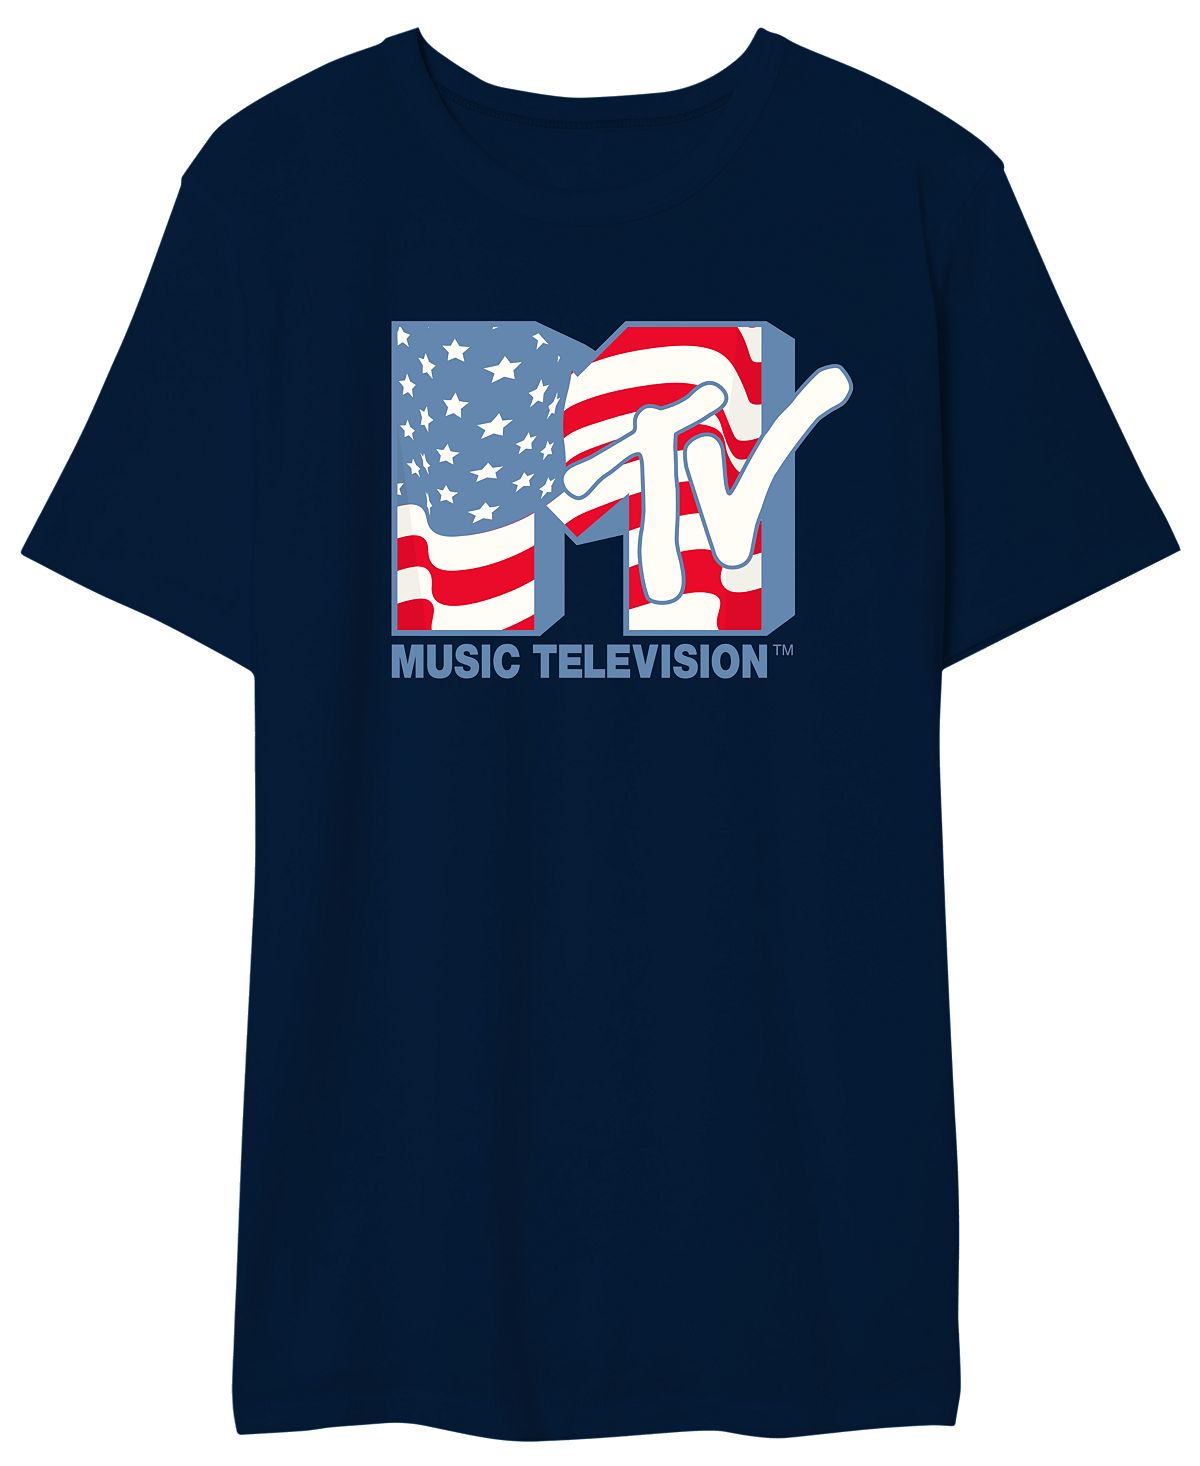 Мужская футболка с американским флагом mtv AIRWAVES, синий мужская футболка корги с флагом россии s белый